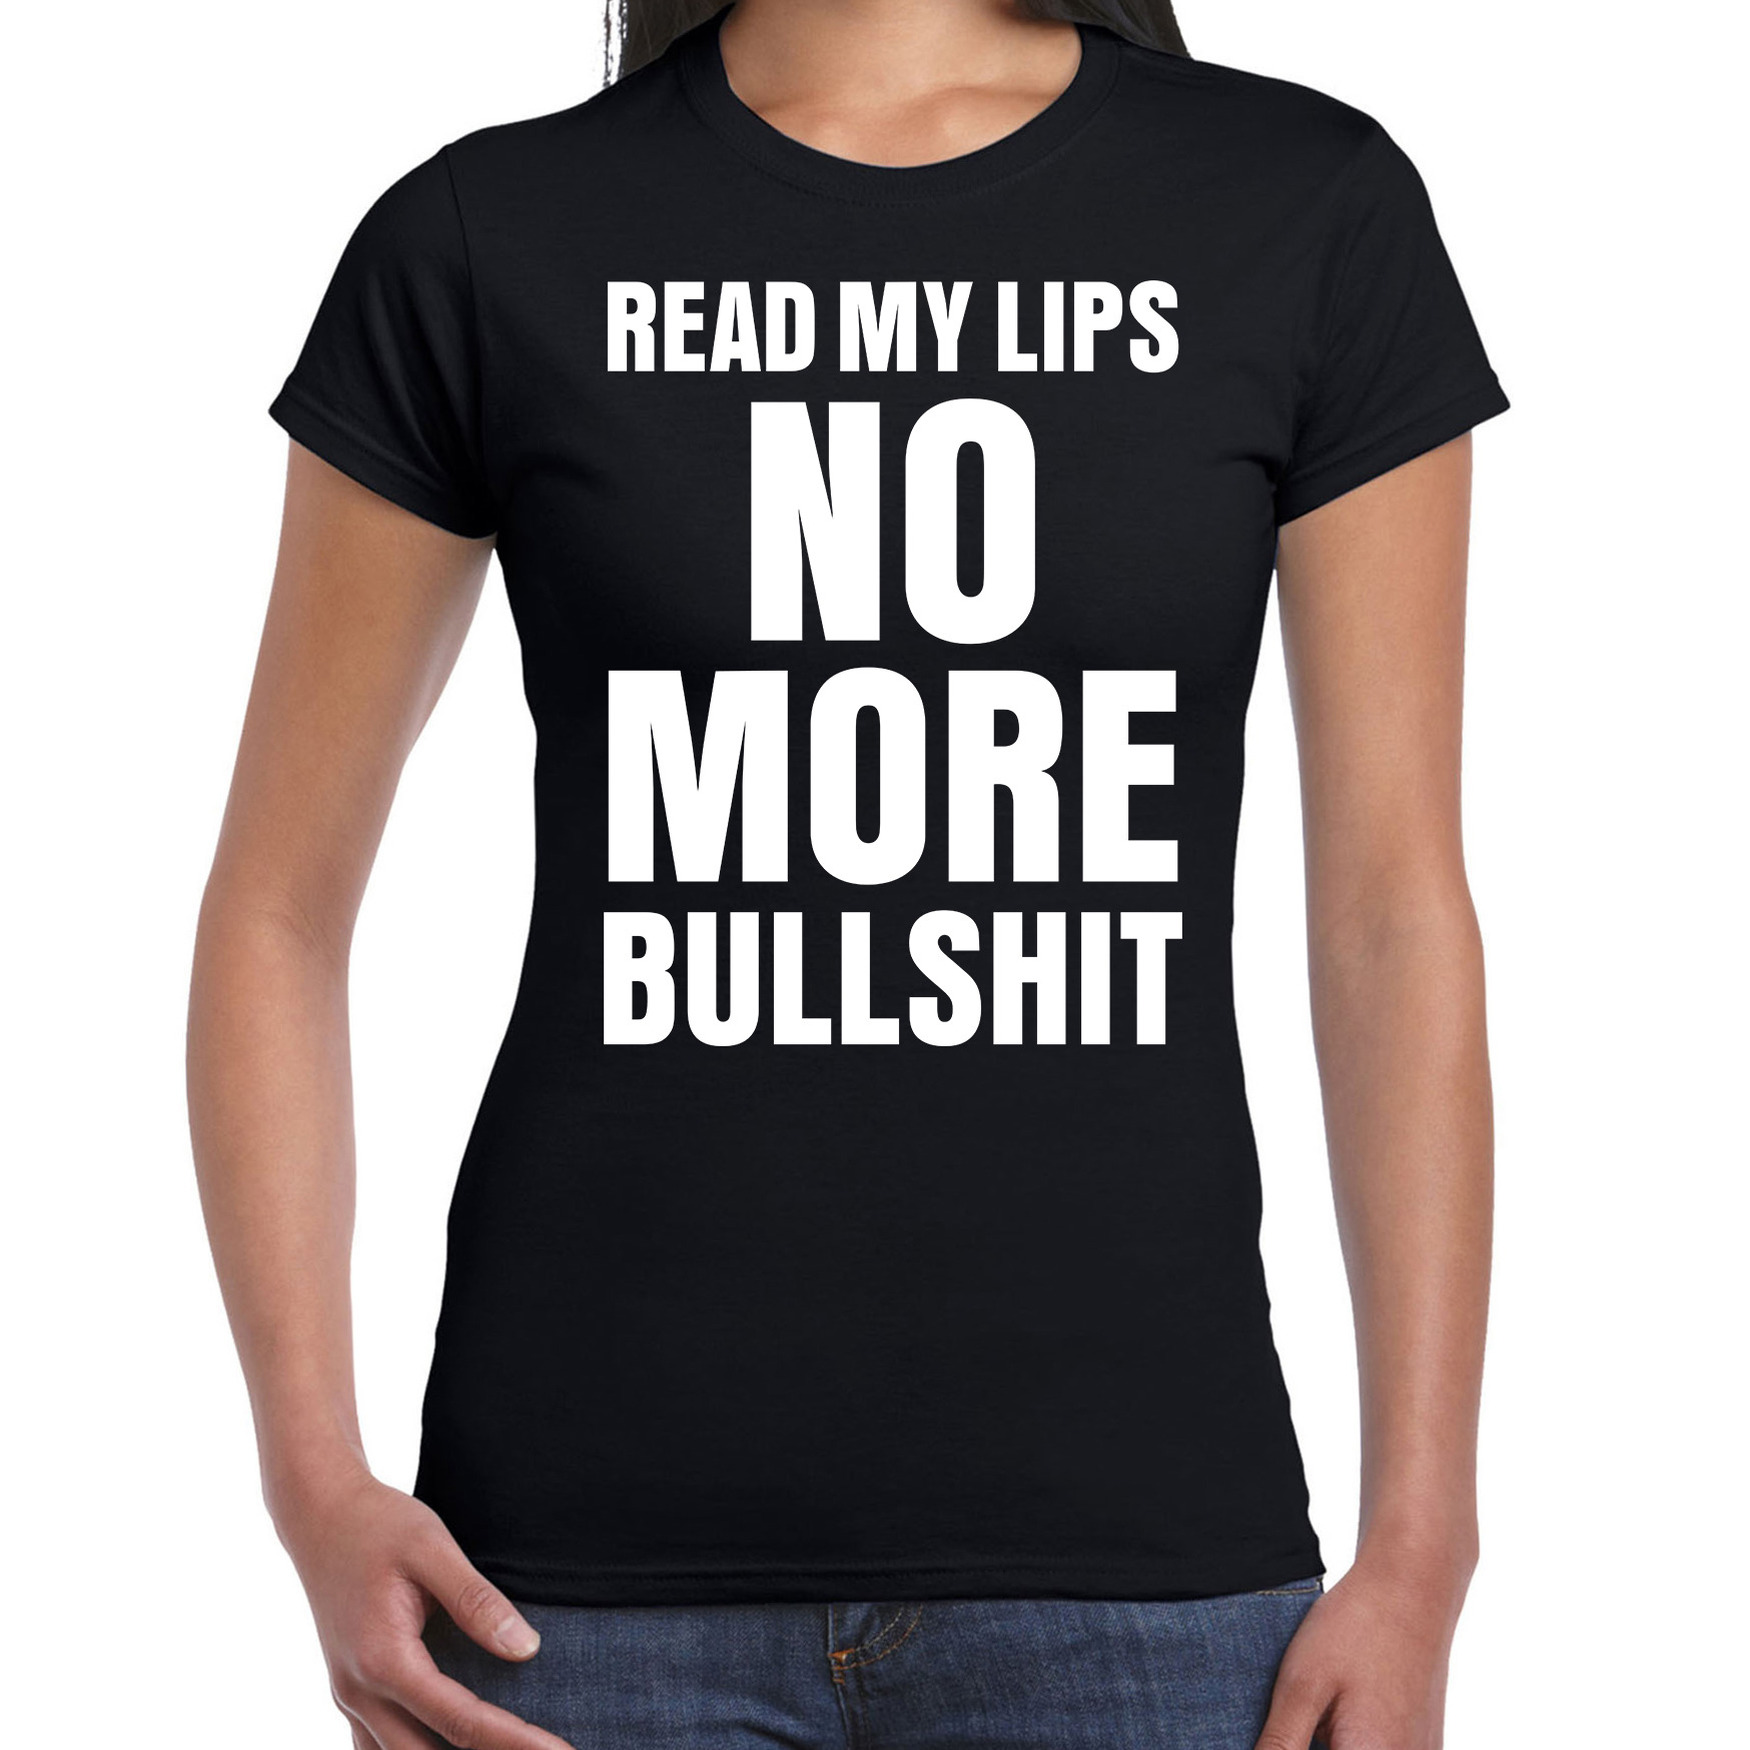 Read my lips NO MORE bullshit t shirt zwart dames fun tekst shirt foute shirts voor vrouwen